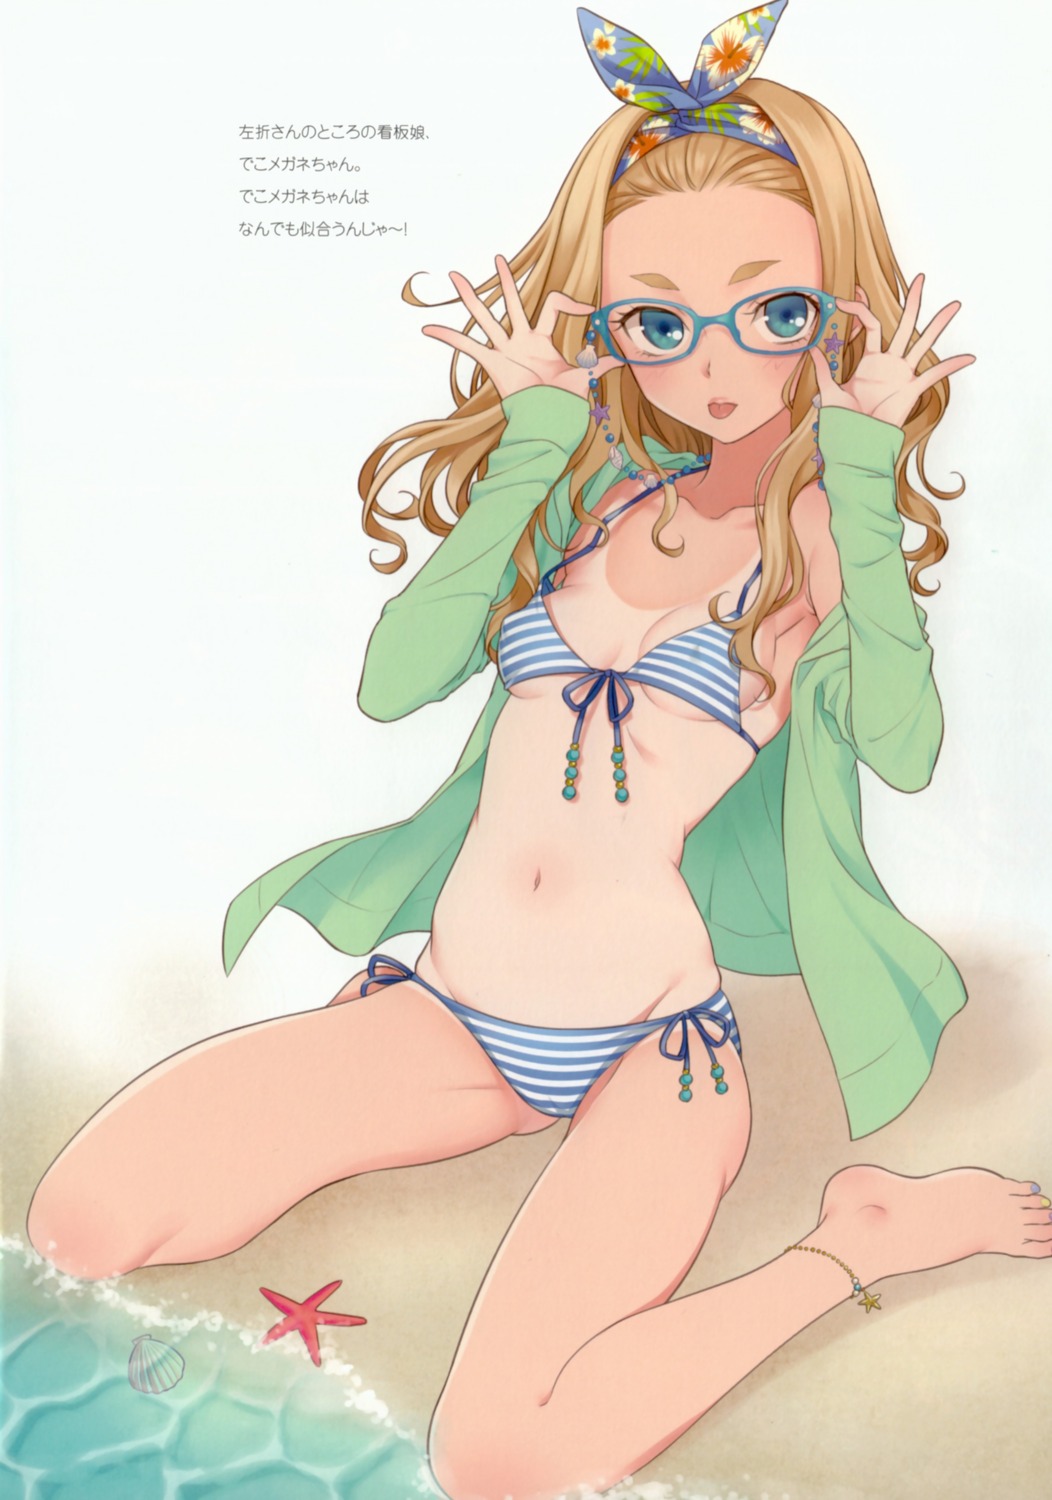 bikini canvas_(morikura_en) cleavage erect_nipples megane morikura_en open_shirt swimsuits tan_lines underboob